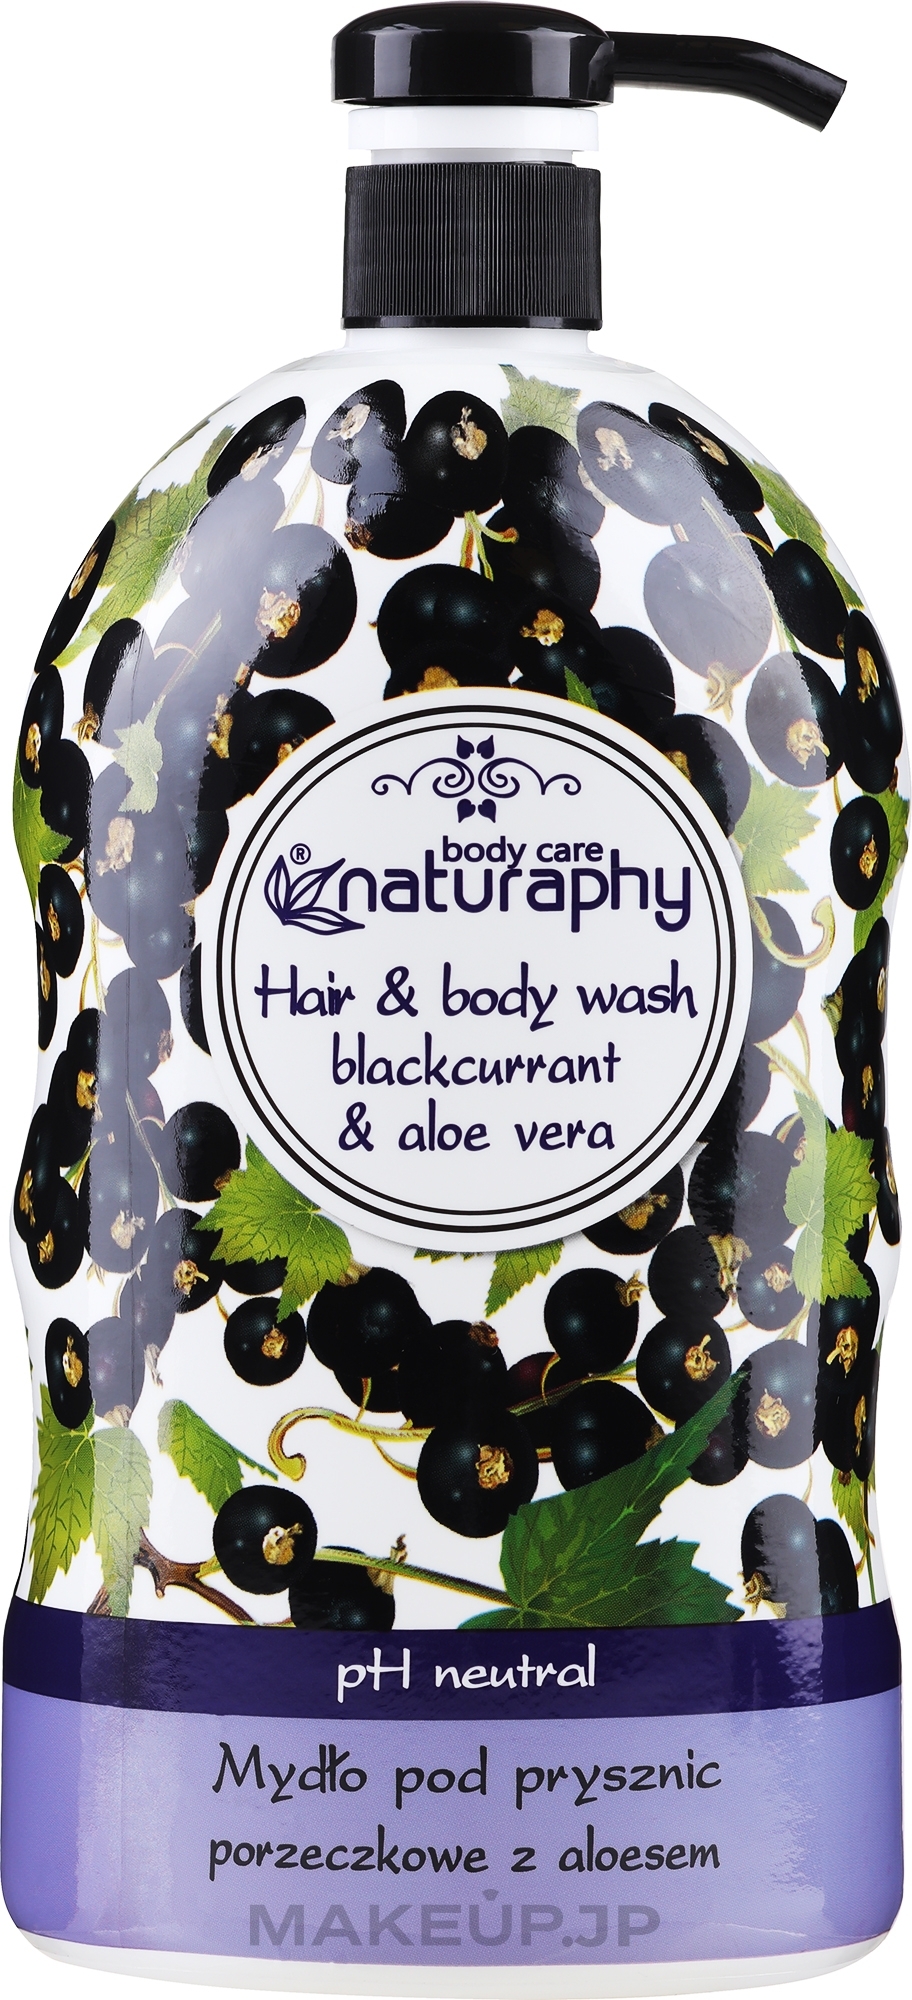 Blackcurrant & Aloe Vera Shampoo-Shower Gel - Naturaphy Blackcurrant & Aloe Vera Hair & Body Wash — photo 1000 ml